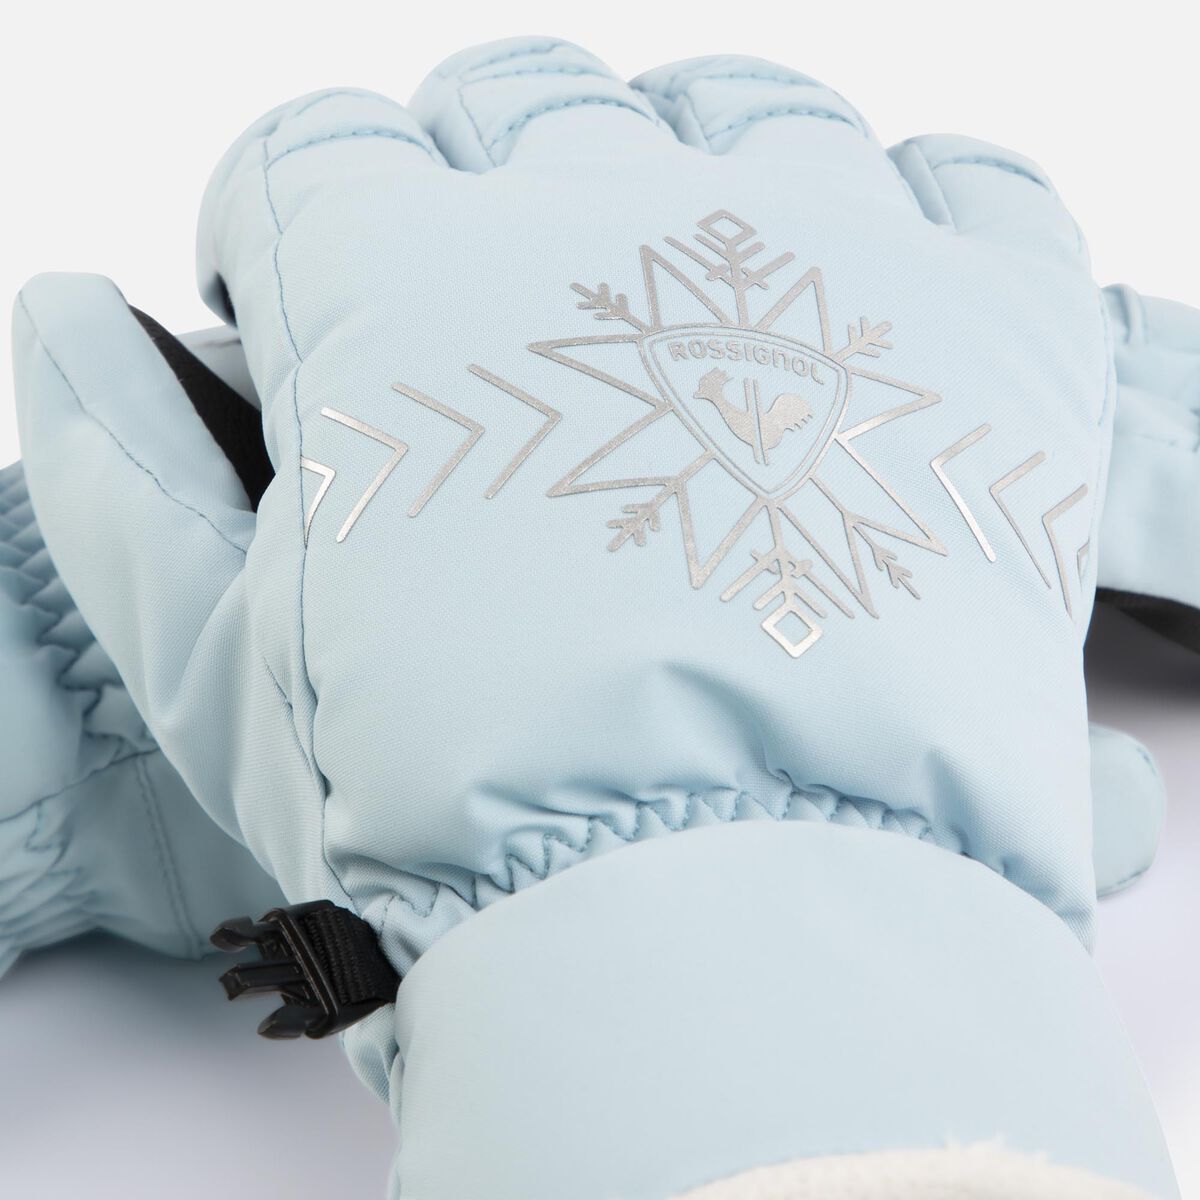 Rossignol Women's Perfy Ski Gloves Blue